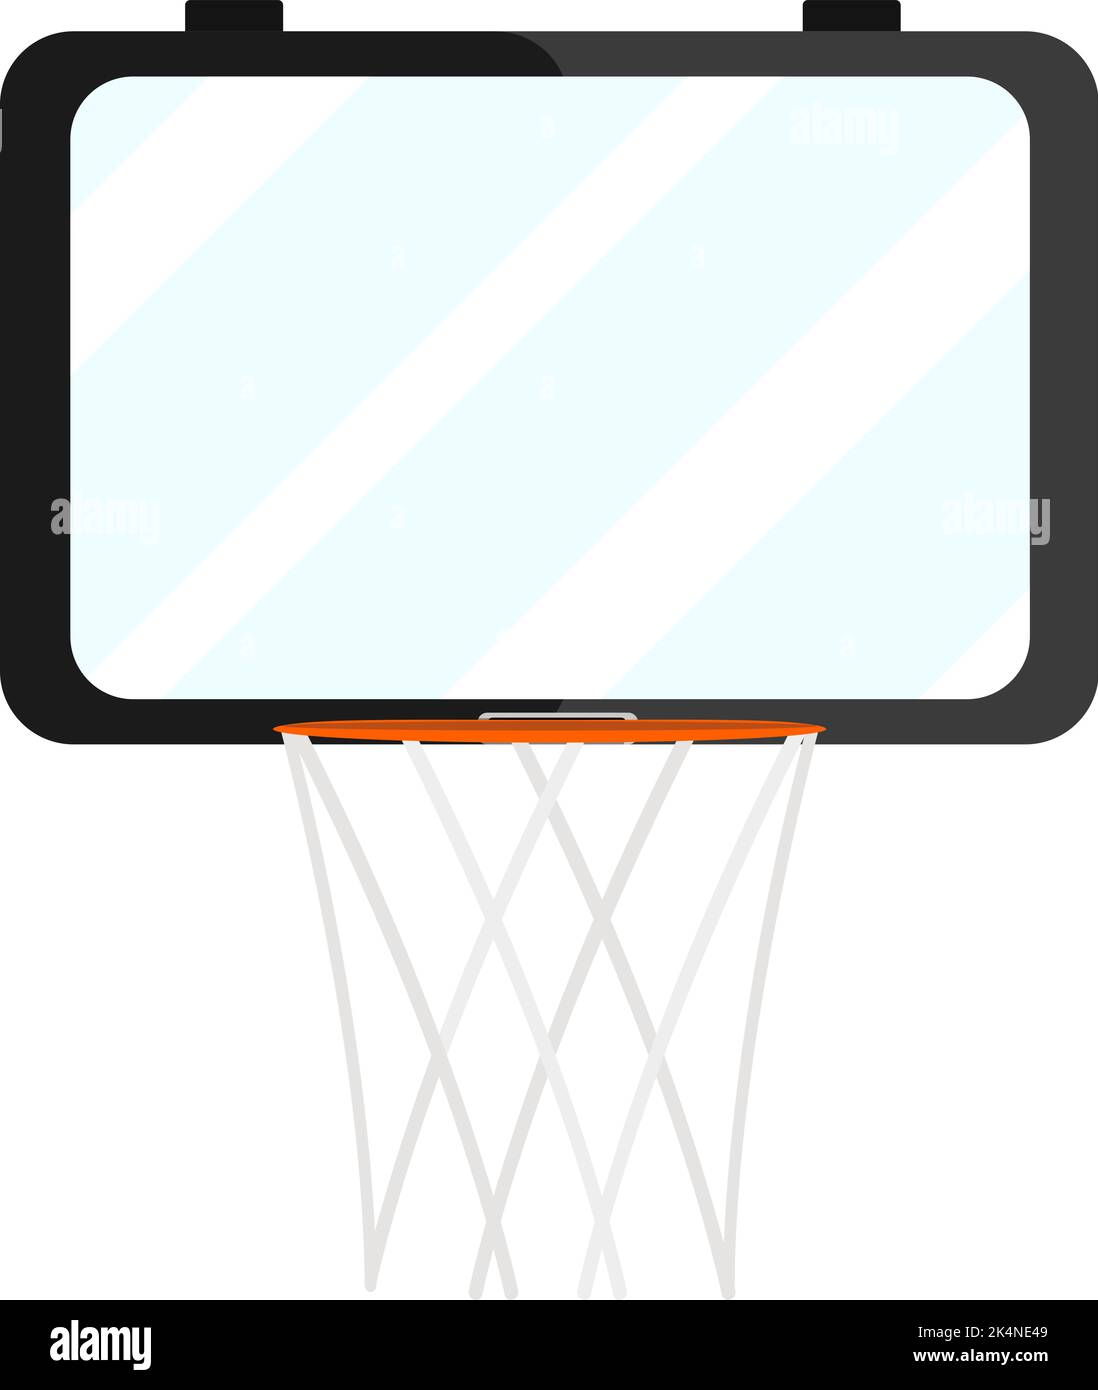 Basketball net, illustration, vector on a white background. Stock Vector